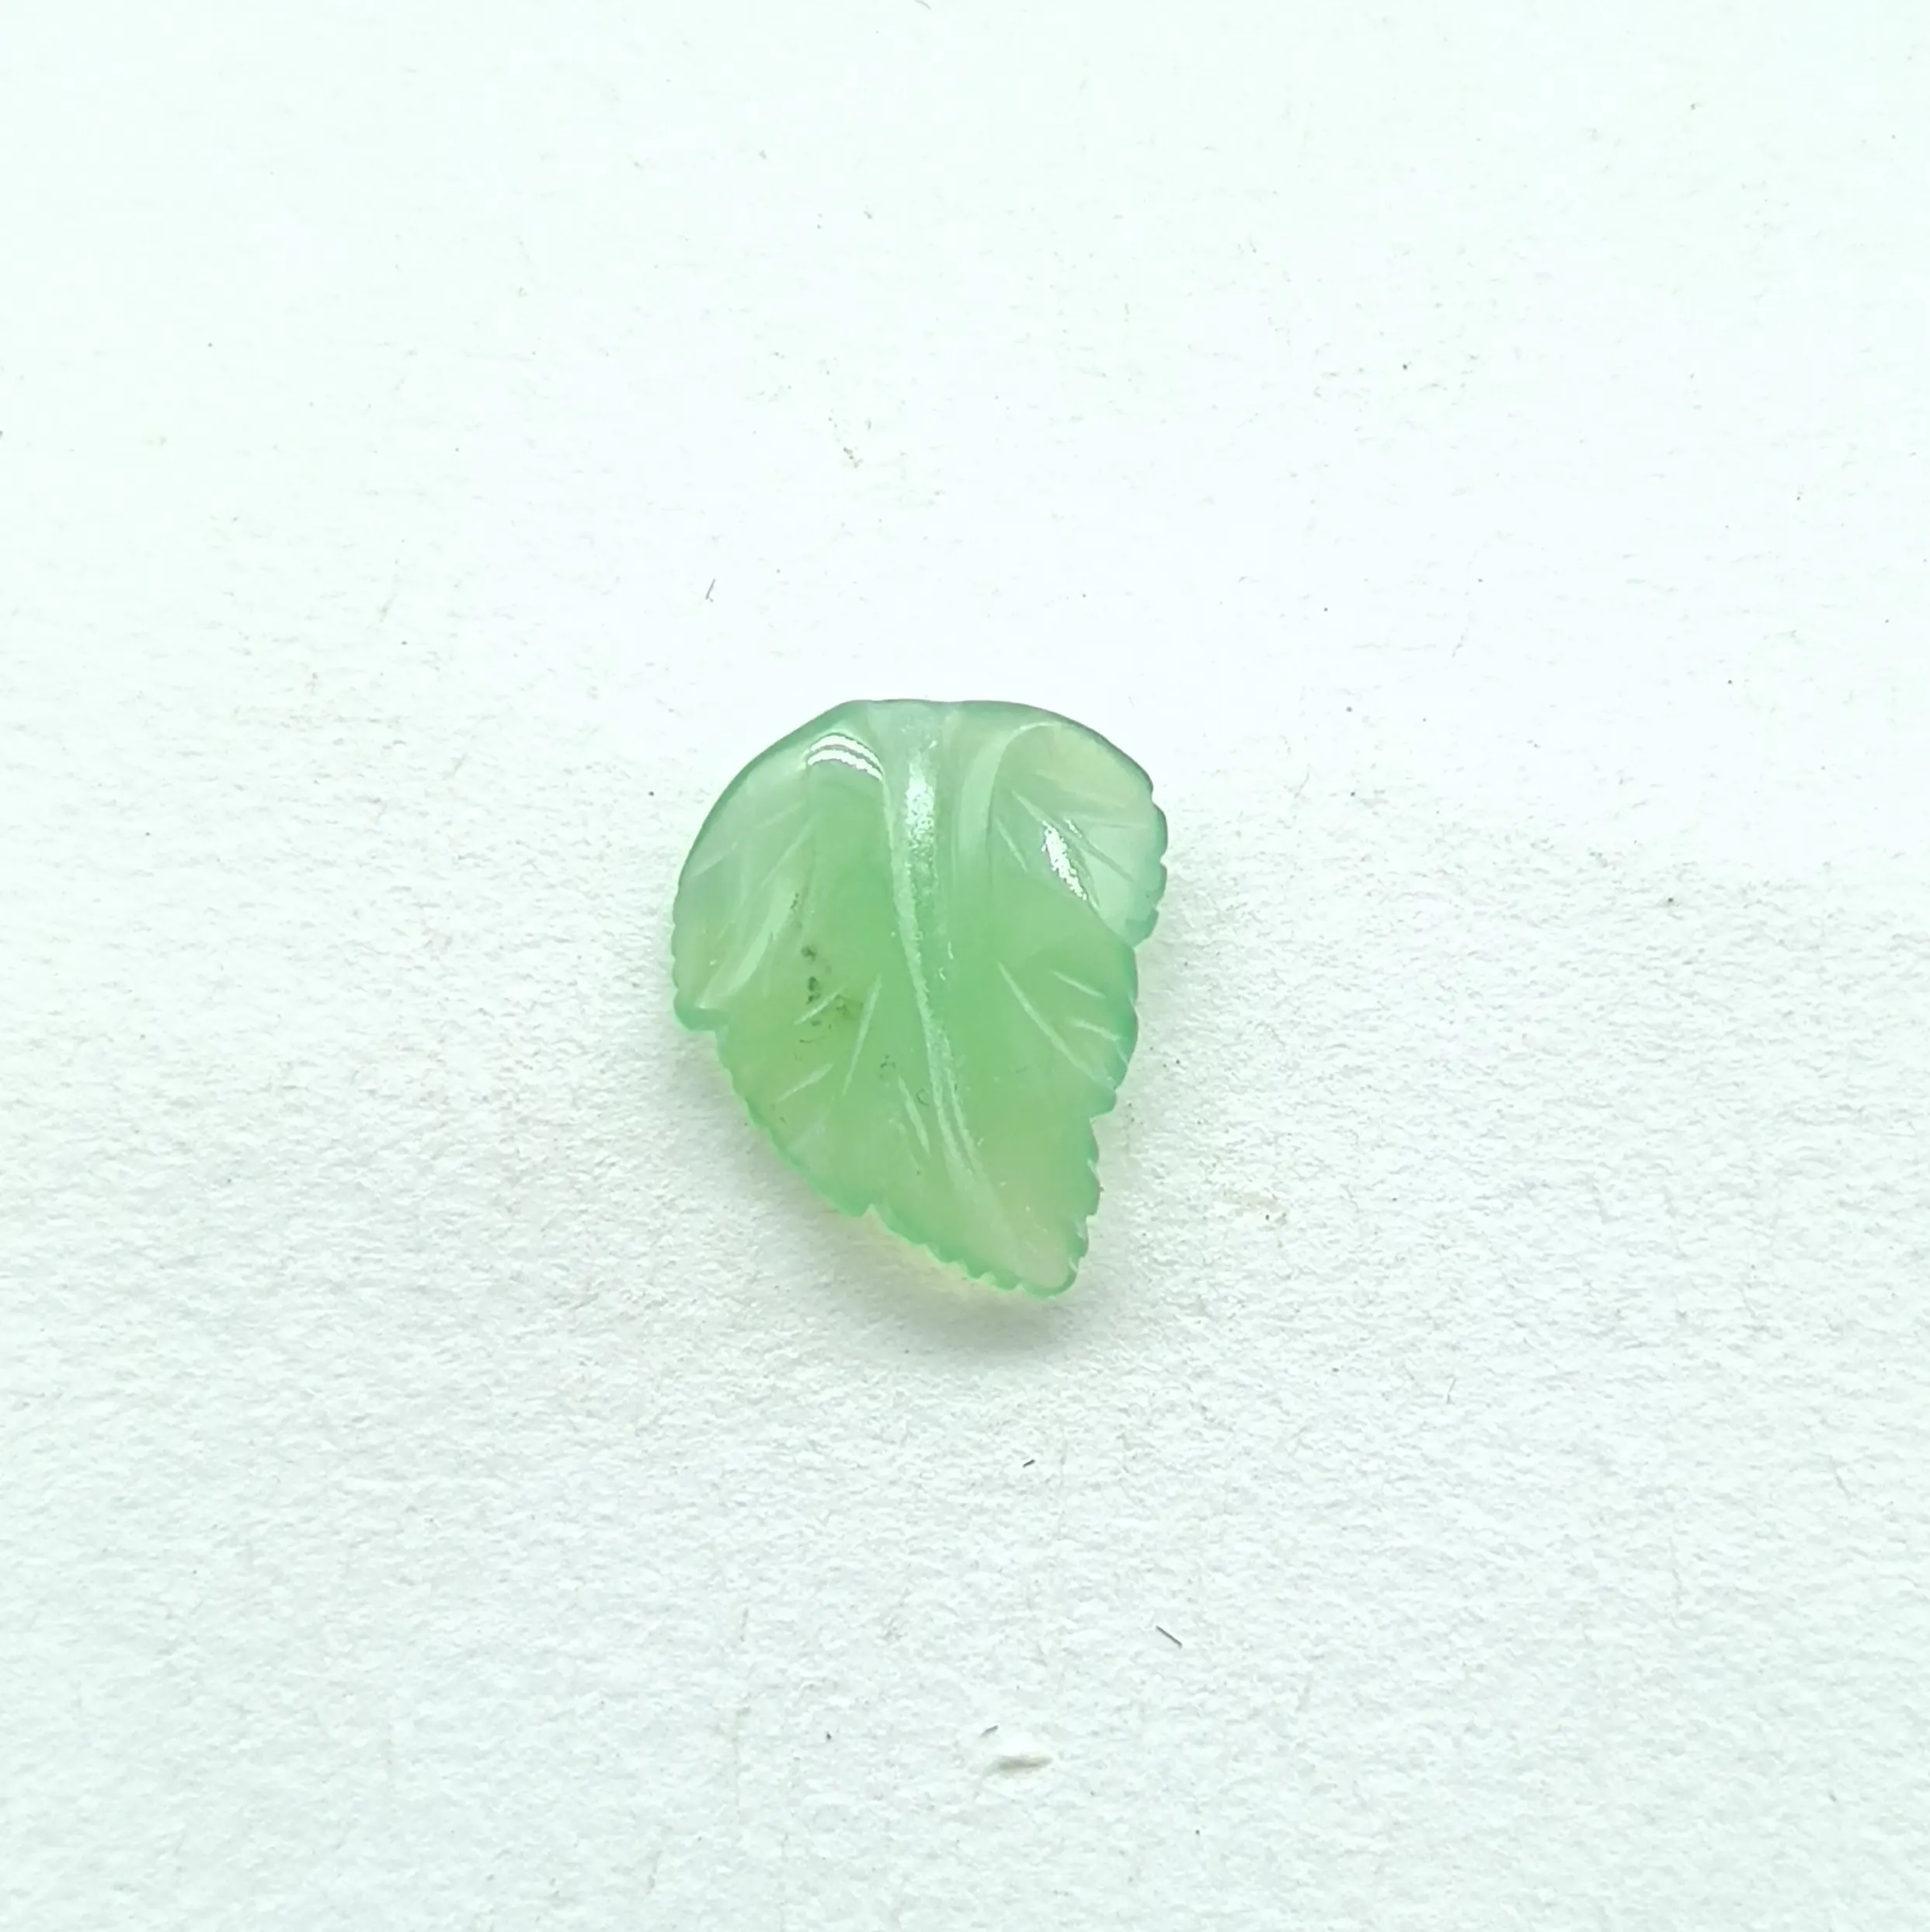 OEM Fabrik preis Produzieren Großhandel Chrysoprase L4 10x8-12x10mm Halbe del steine Grüne Farbe Brilliancy Leaf For Design